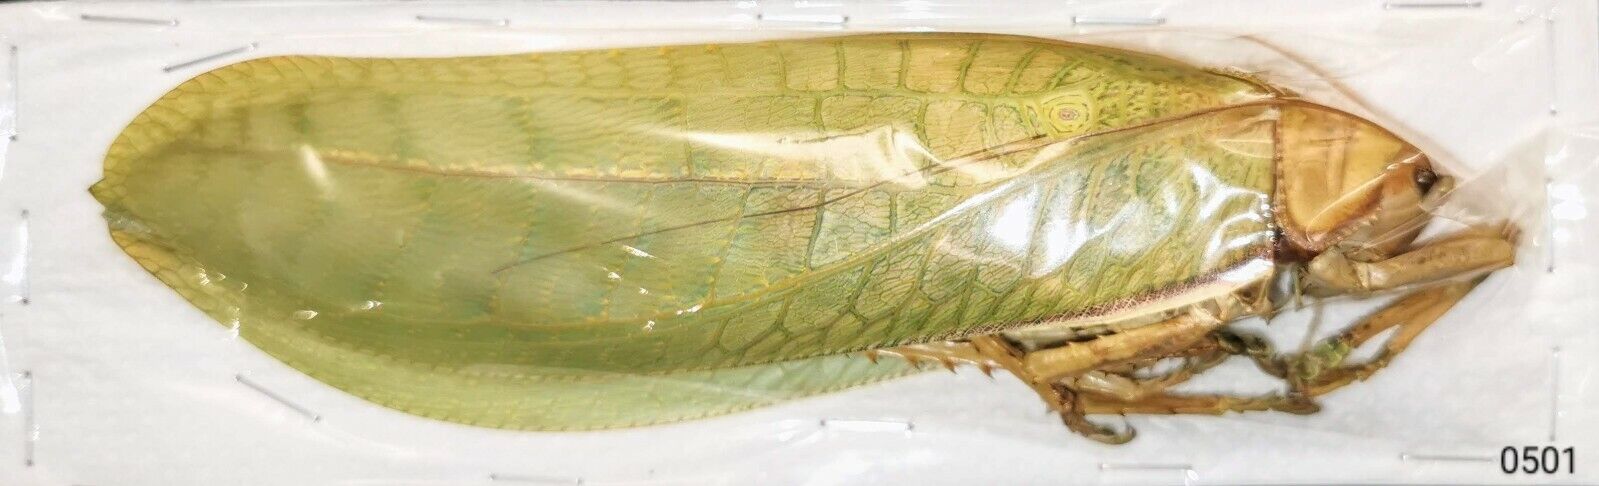 Orthoptera Sasuma sp WS 20cm+ A1 or A- XL FEMALE THAILAND - #0501